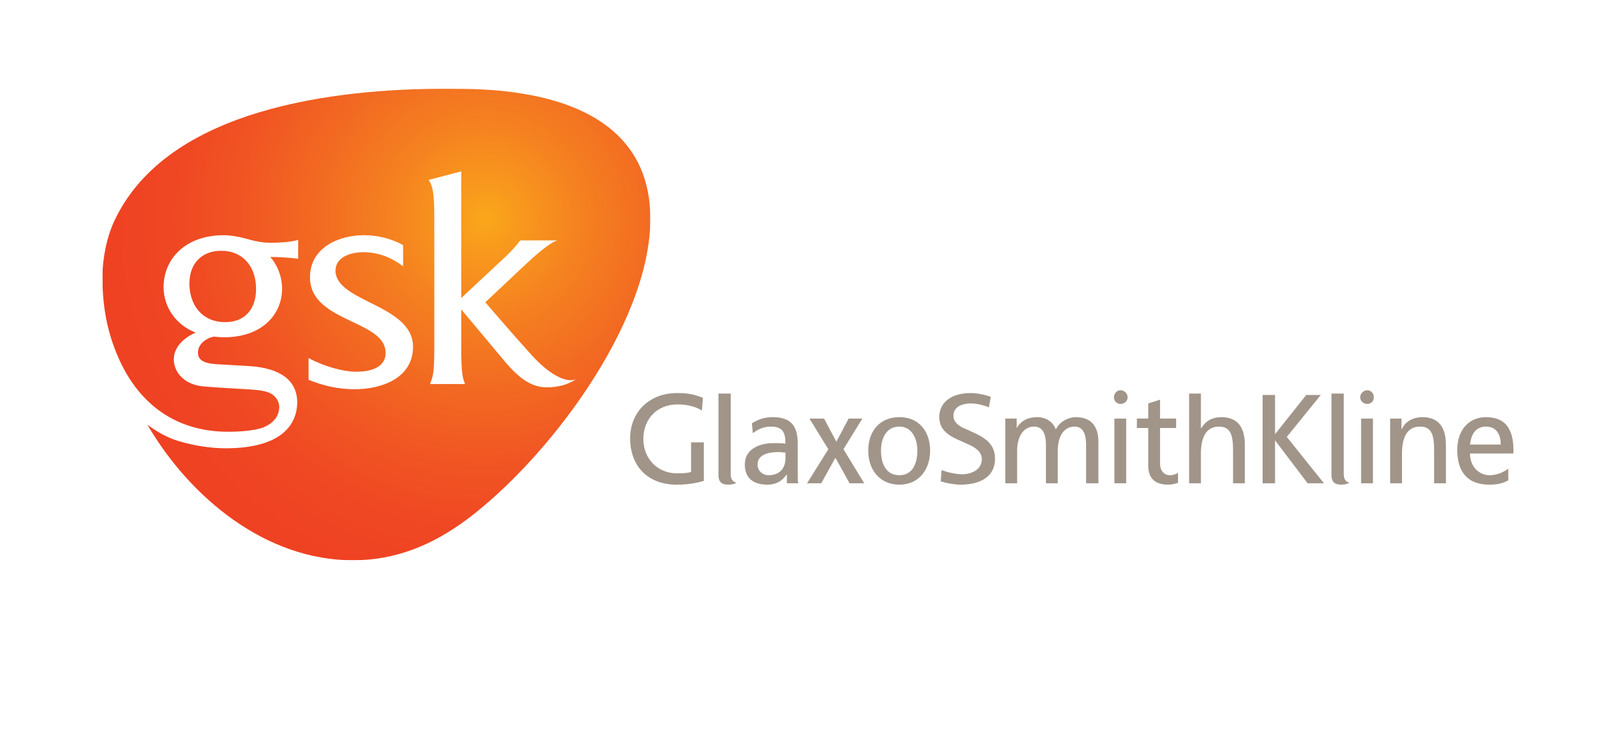 glaxosmithkline-logo-png-transparent-1.png